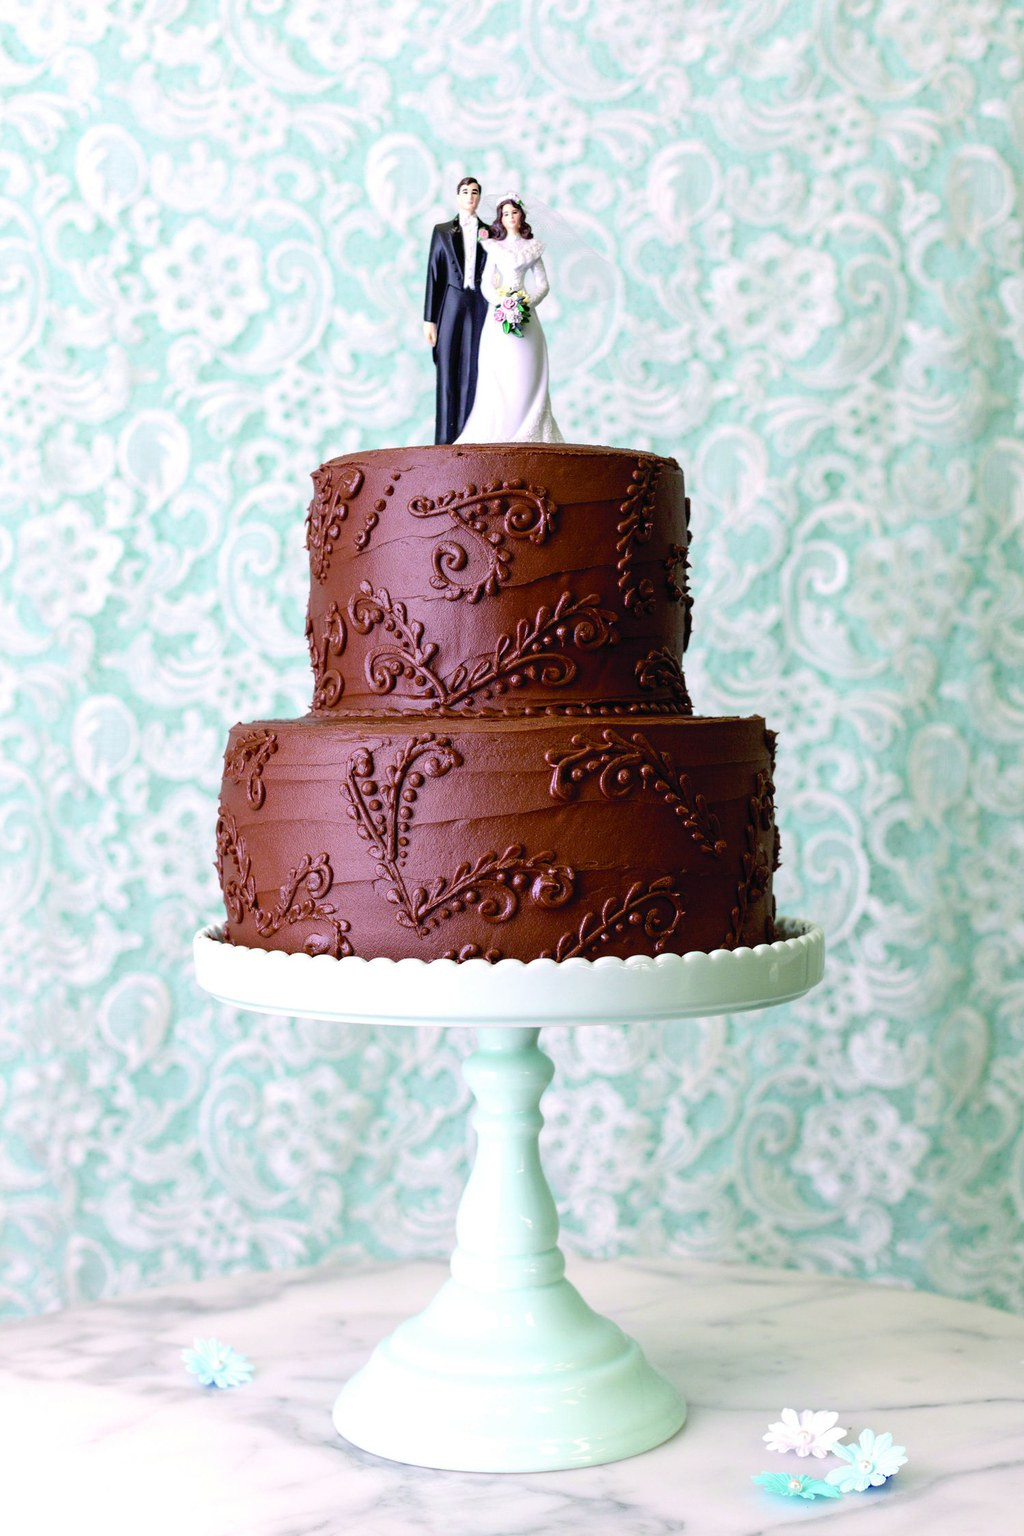 No Fondant Wedding Cakes
 21 Magnolia Bakery Wedding Cakes That Look So Delicious